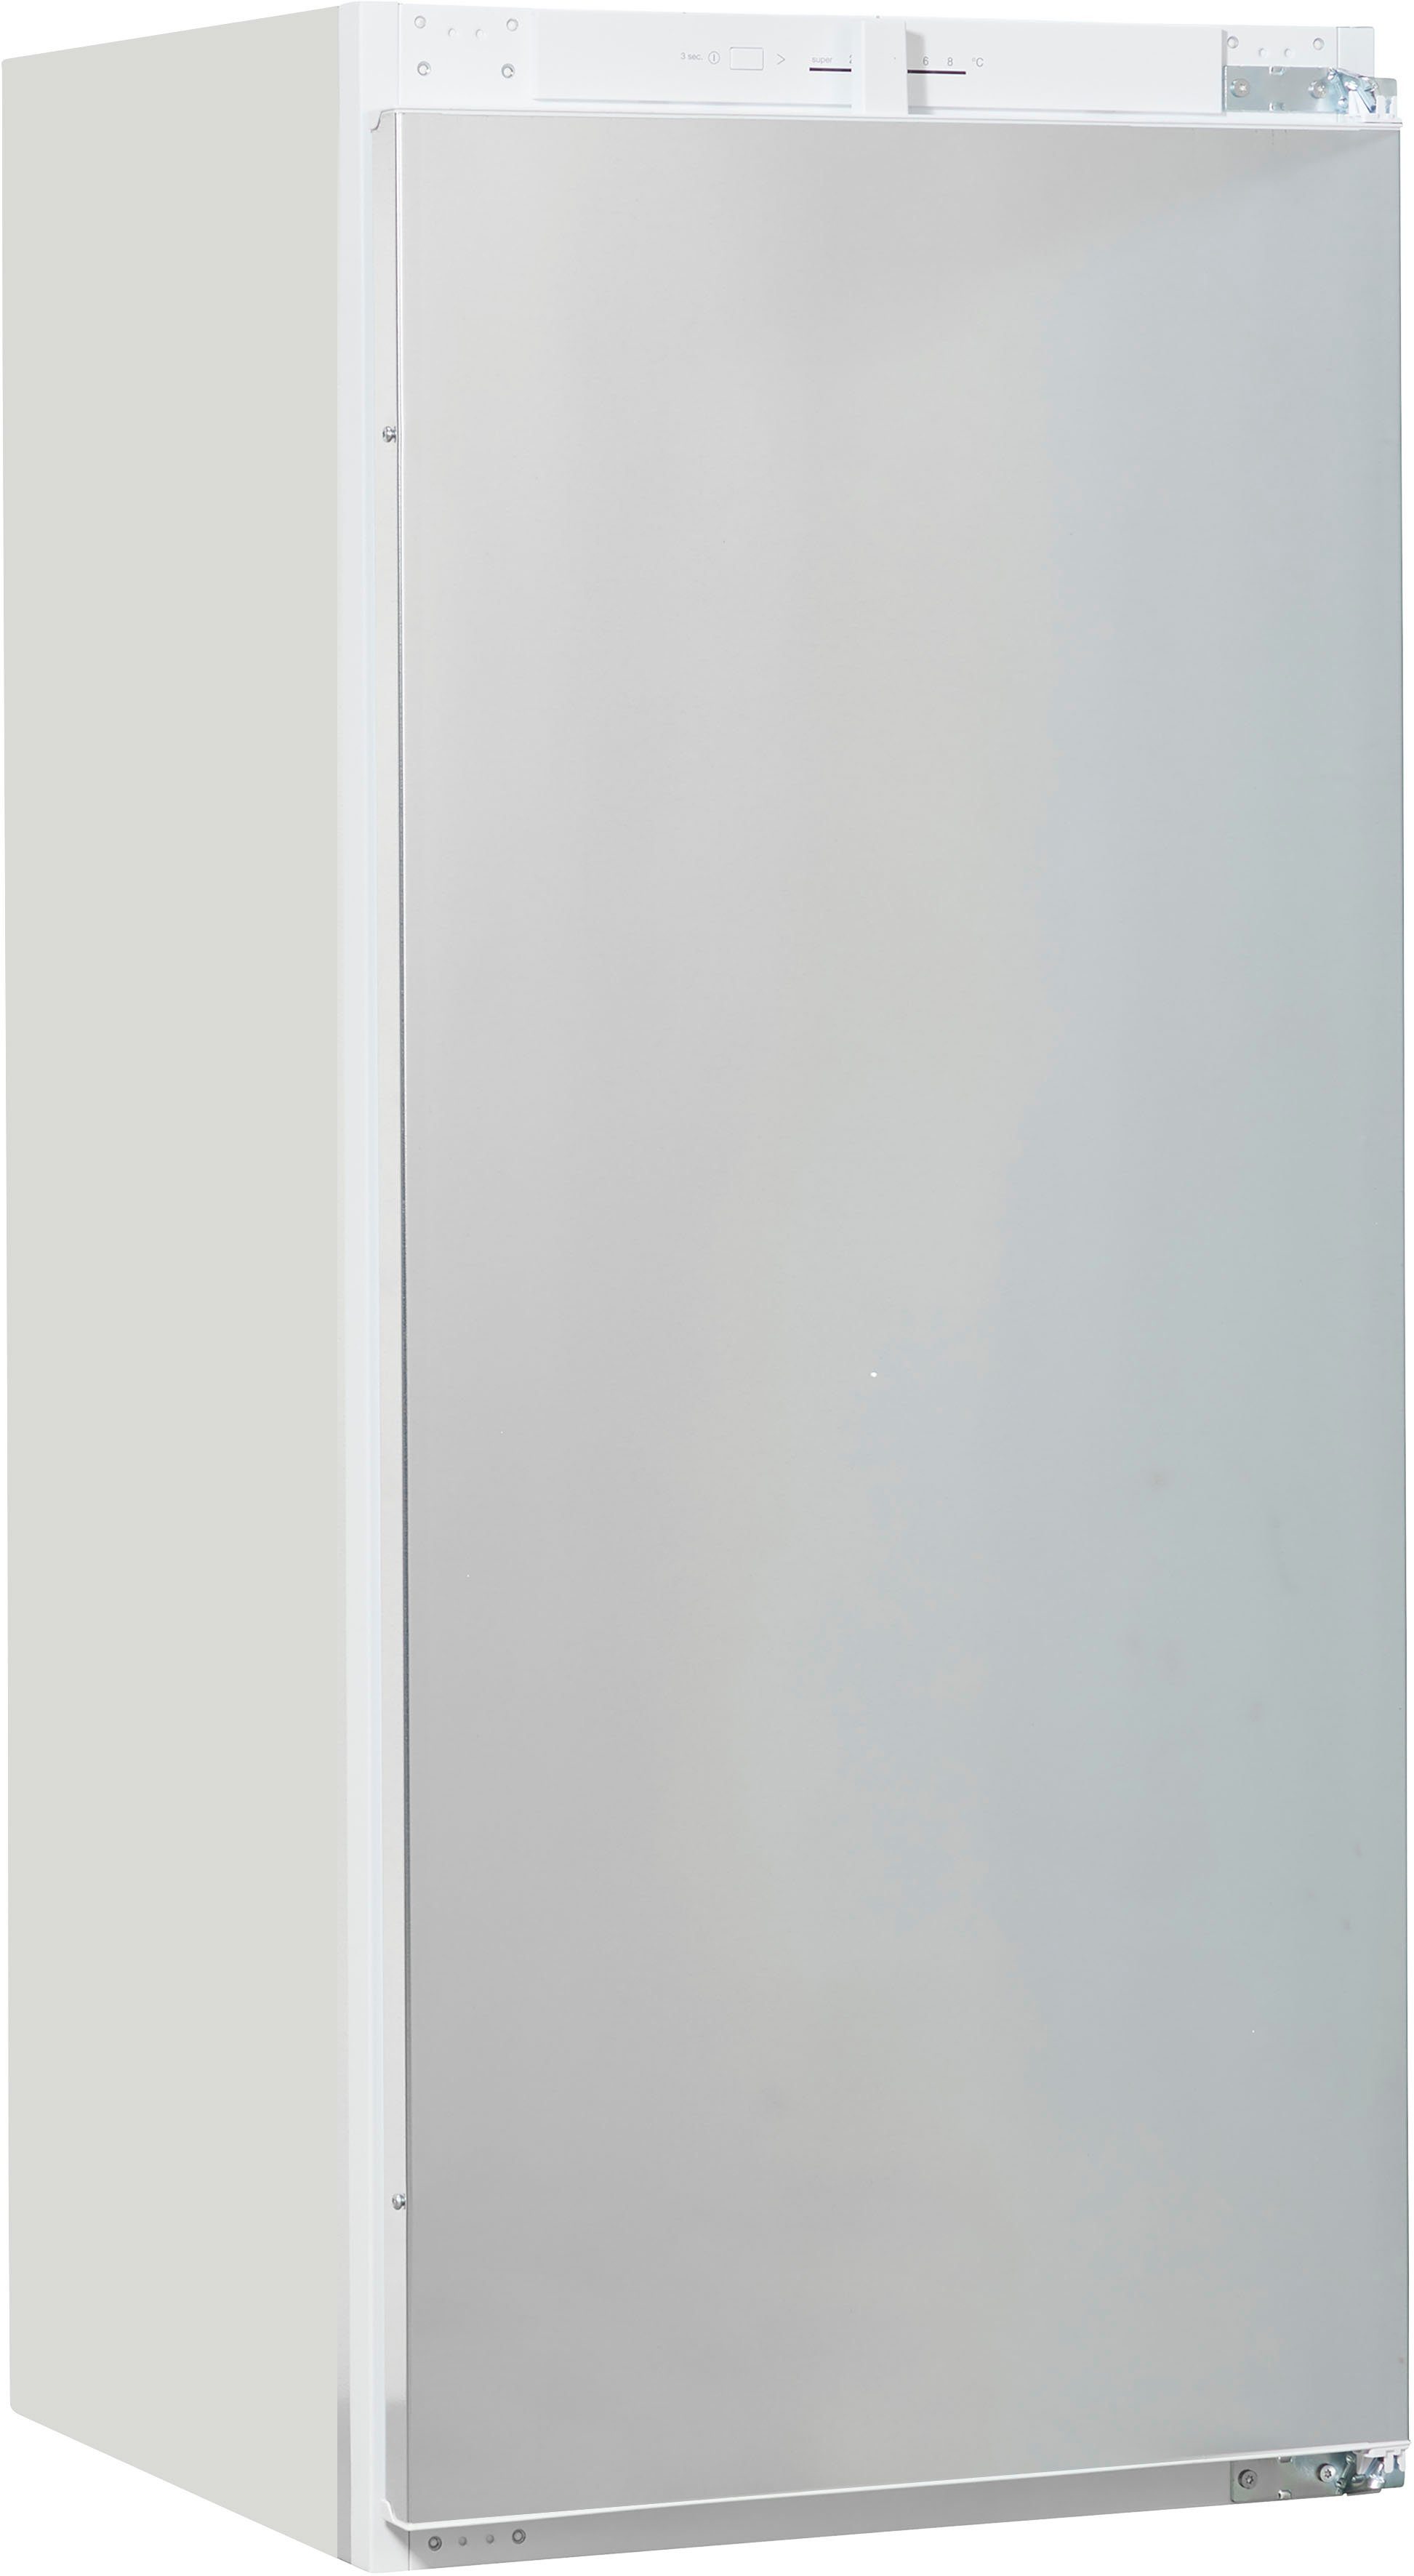 BOSCH Einbaukühlschrank Serie 2 hoch, 35 dB 122,1 KIL42NSE0, cm 54,1 breit, Betriebsgeräusch: cm